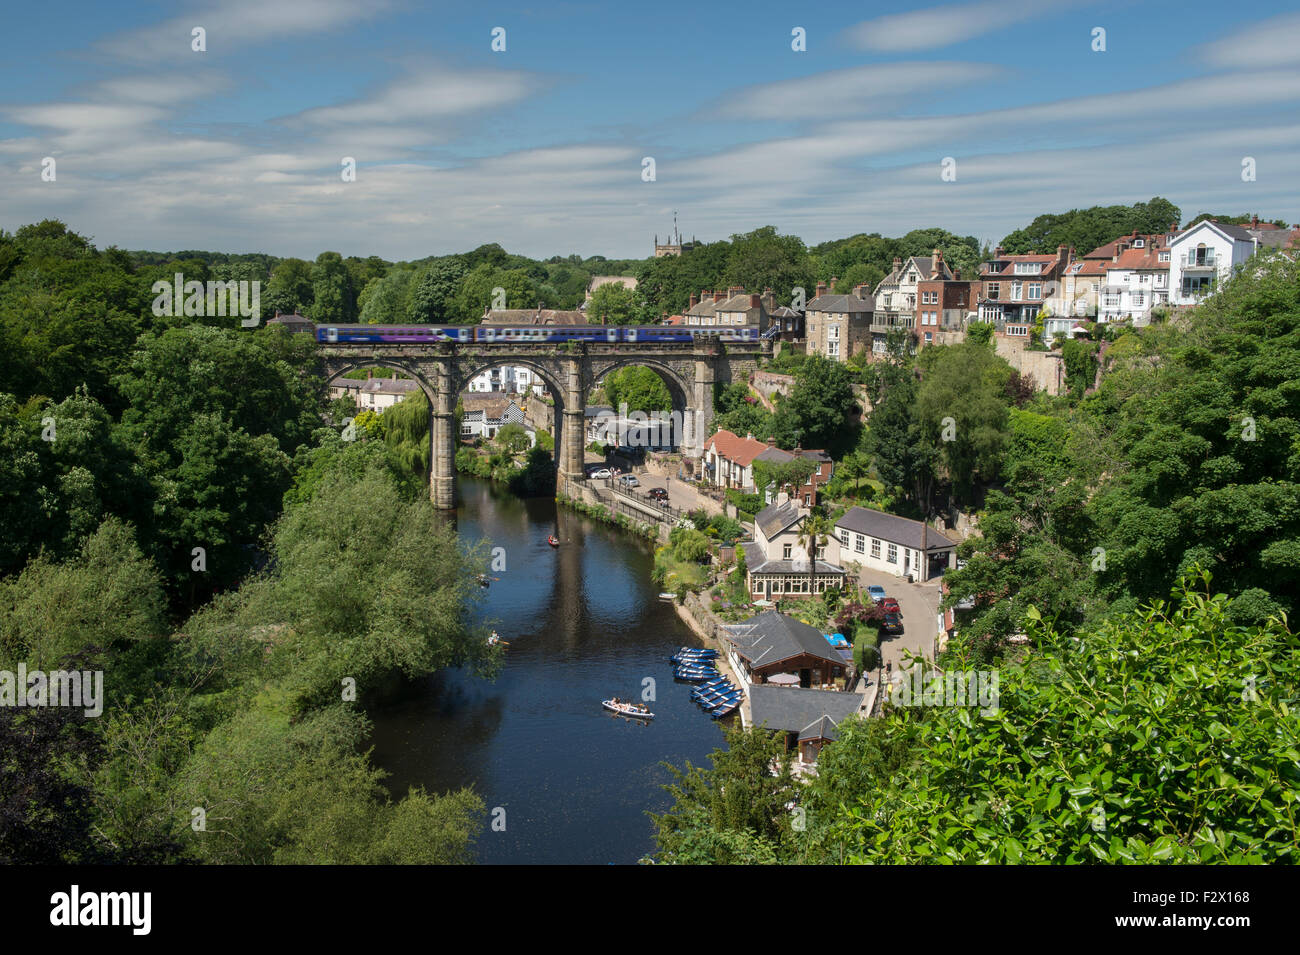 Scenic sunny summer Knaresborough (train on viaduct, boating on River Nidd, gorge, riverside & hillside buildings, blue sky) - Yorkshire, England, UK Stock Photo